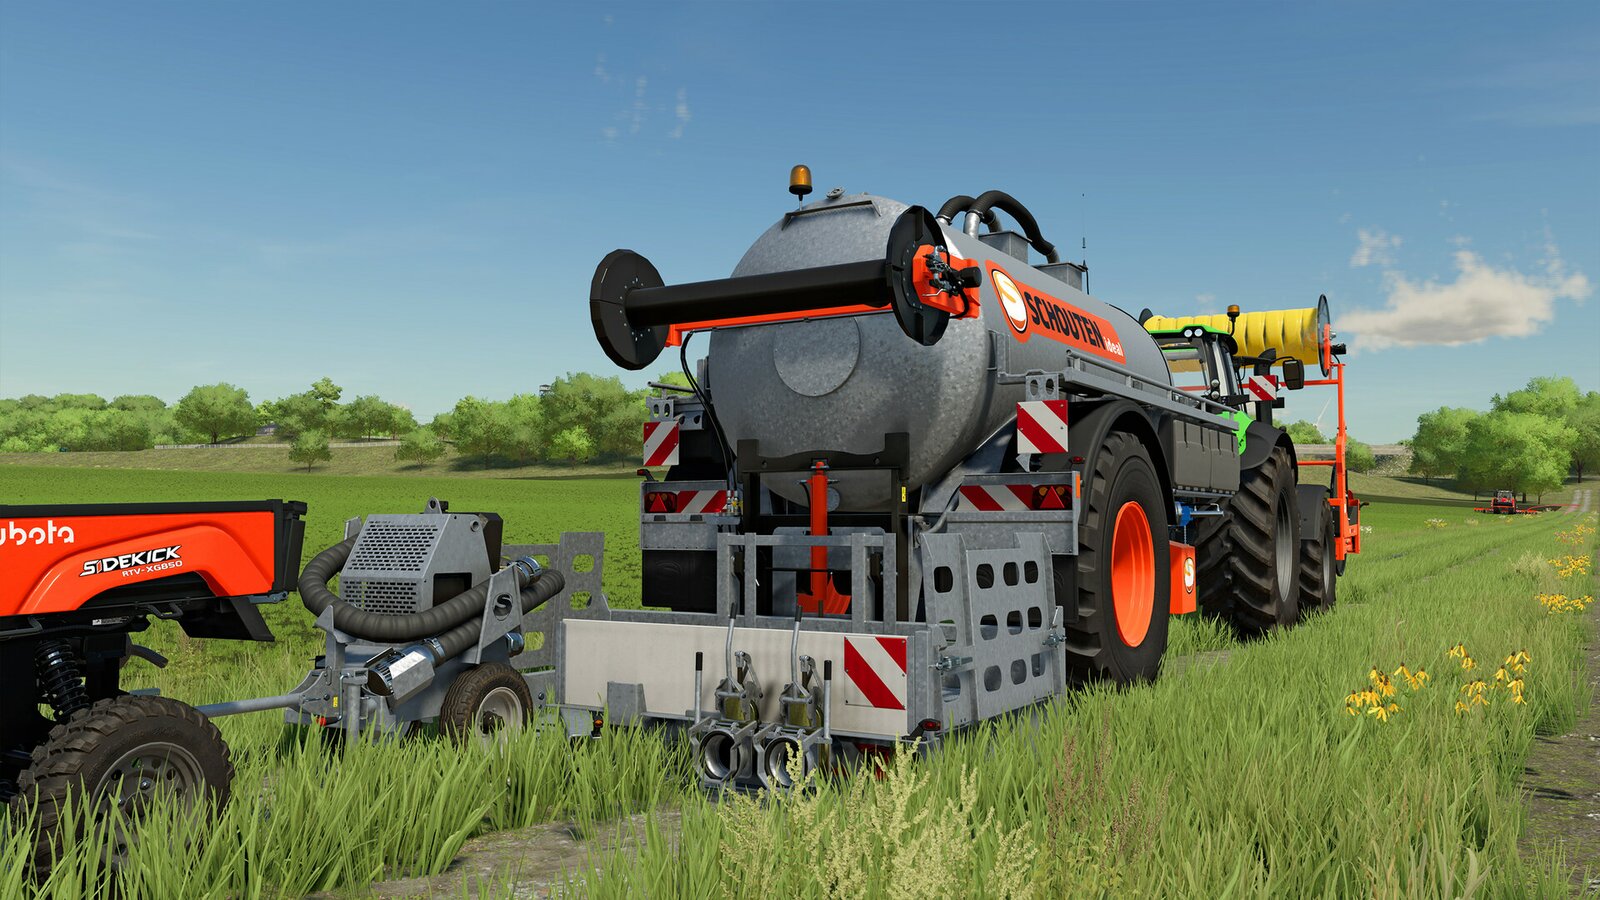 Farming Simulator 22 - Pumps n' Hoses